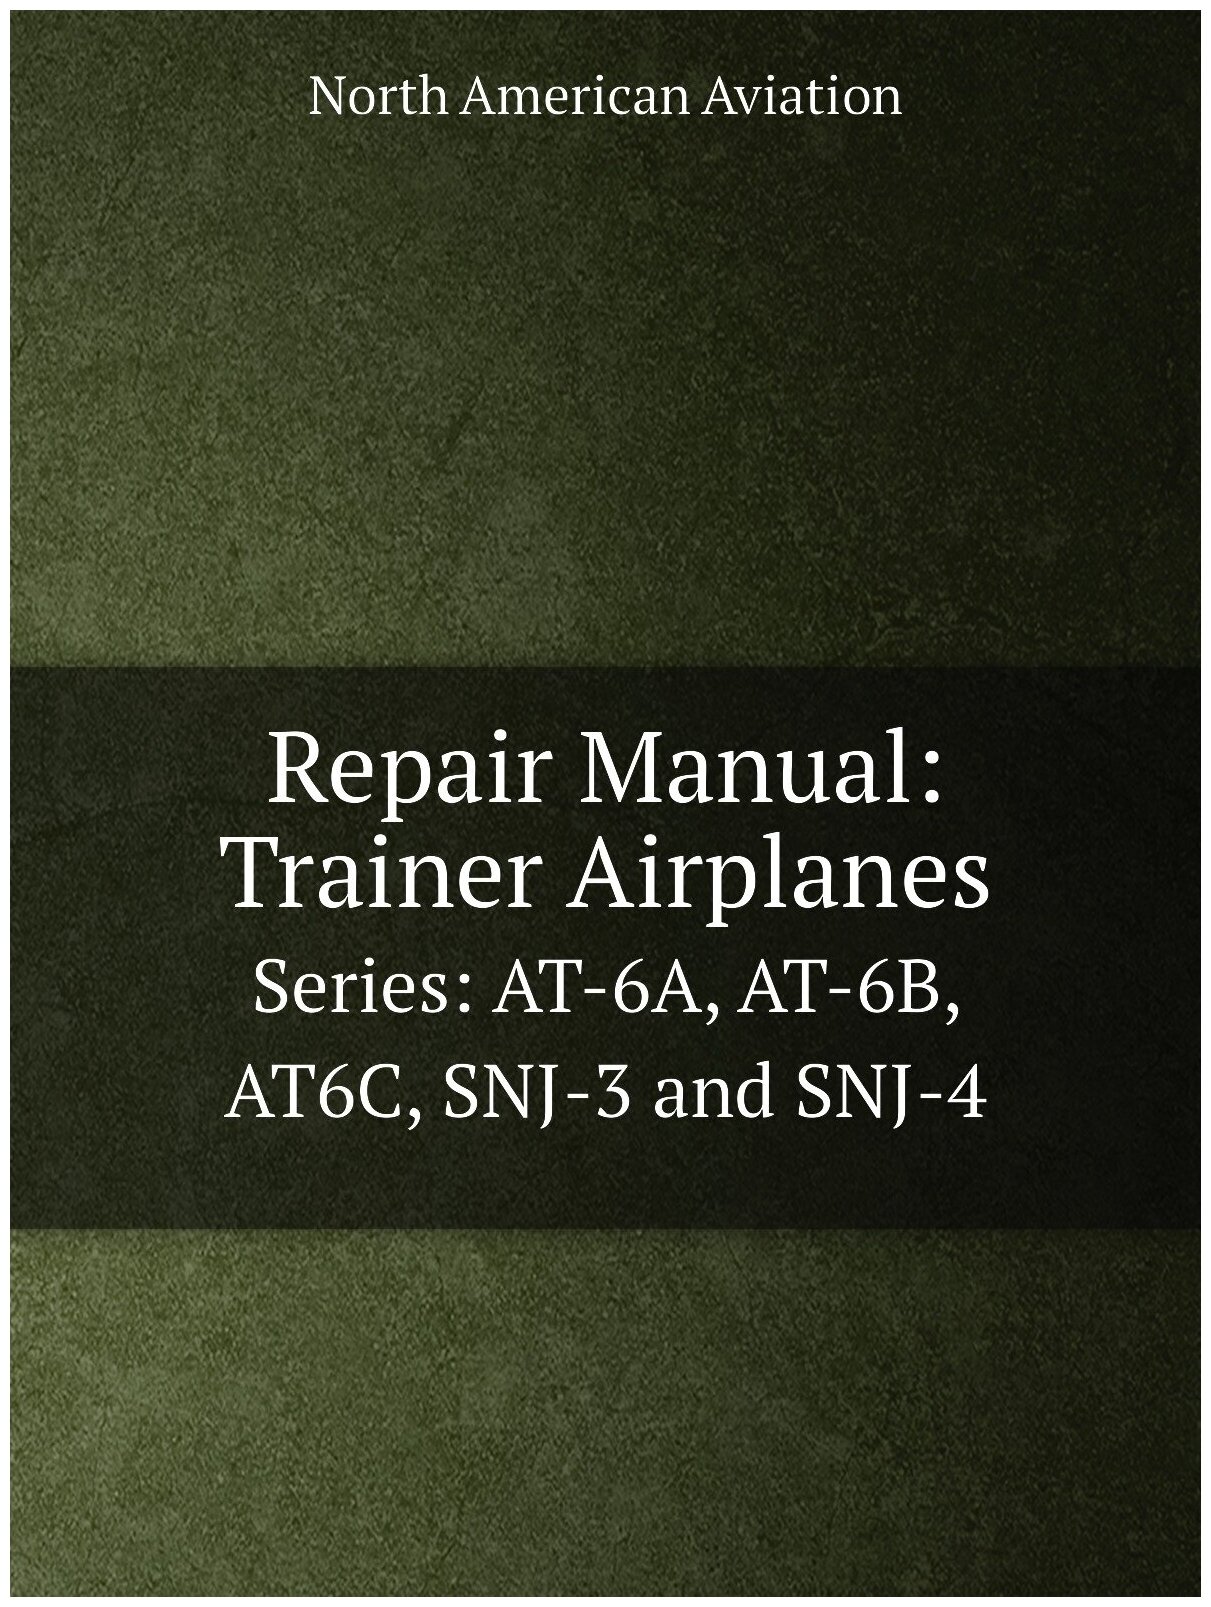 Repair Manual: Trainer Airplanes. Series: AT-6A, AT-6B, AT6C, SNJ-3 and SNJ-4